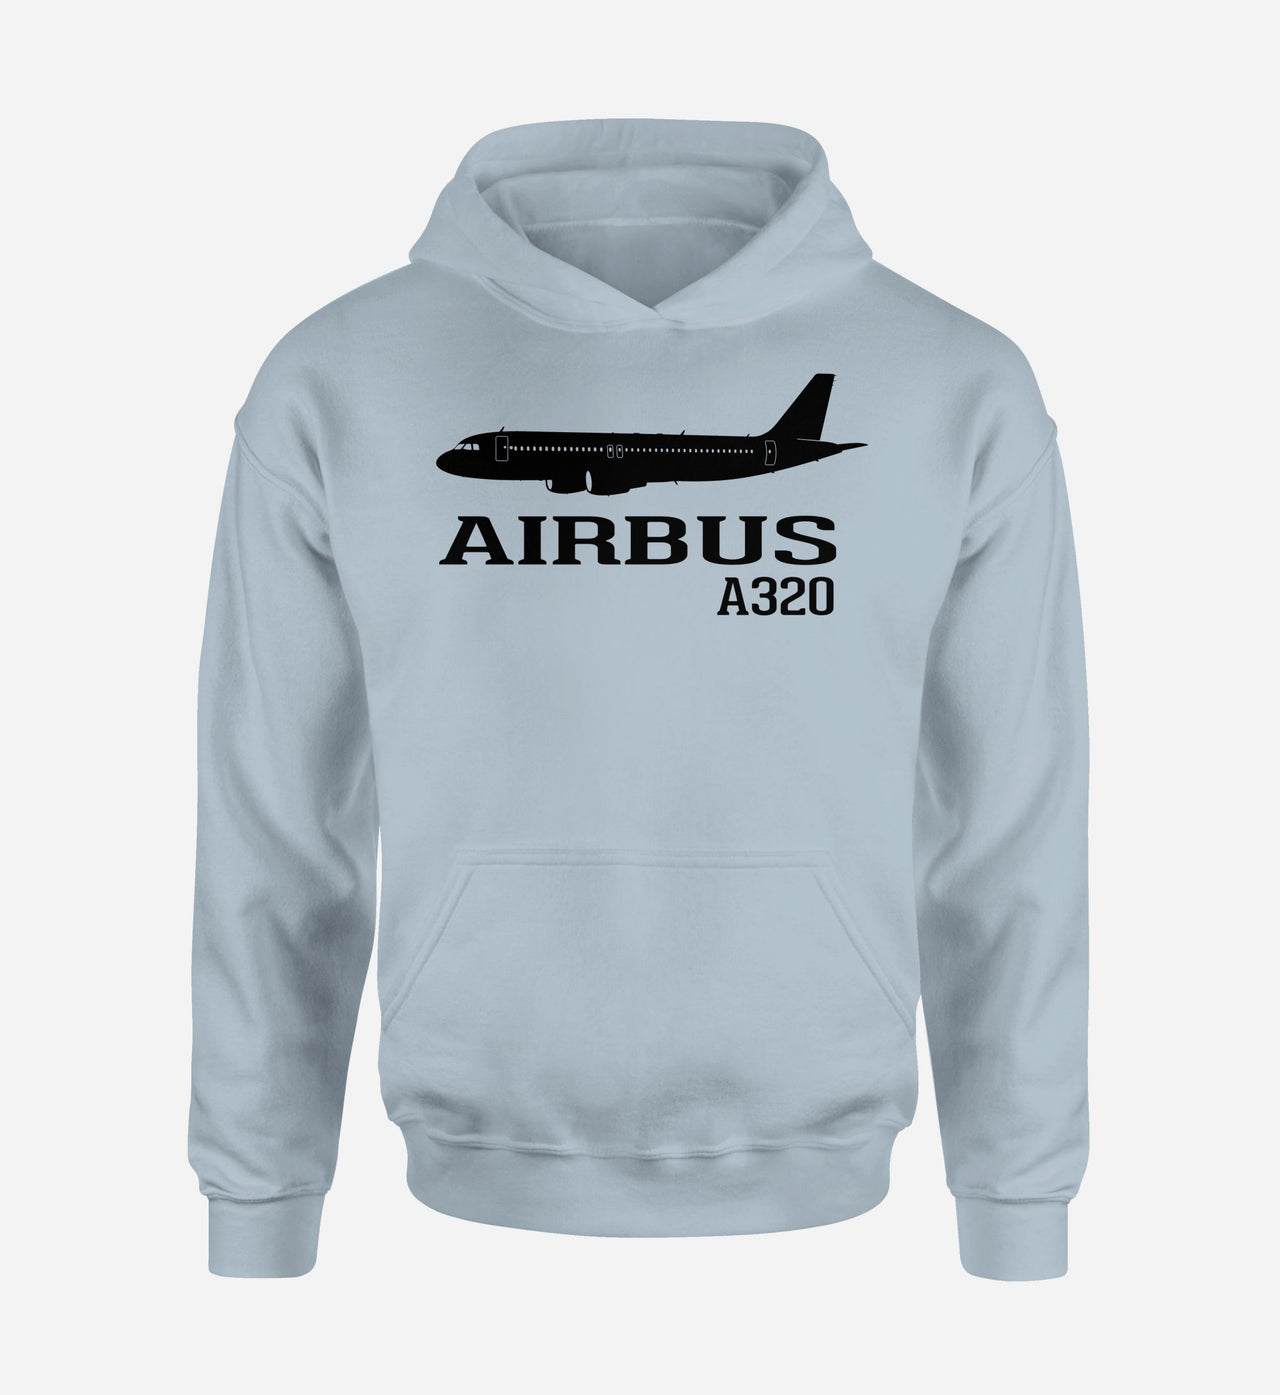 Airbus A320 Printed Designed Hoodies